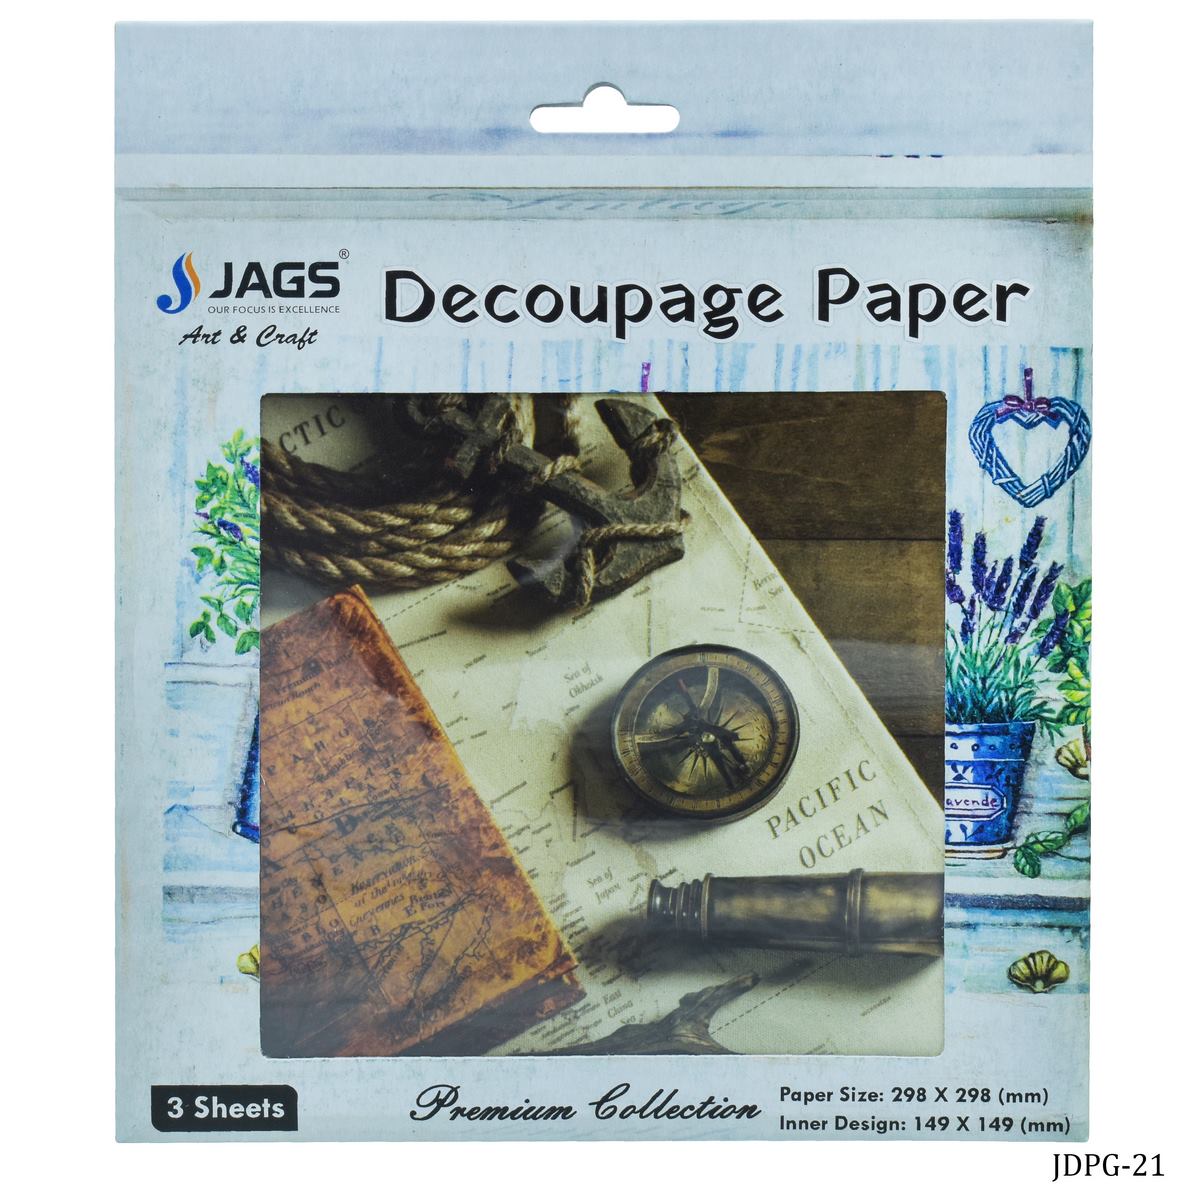 jags-mumbai Decoupage Jags Decoupage Paper Vintage Colle JDPG-21